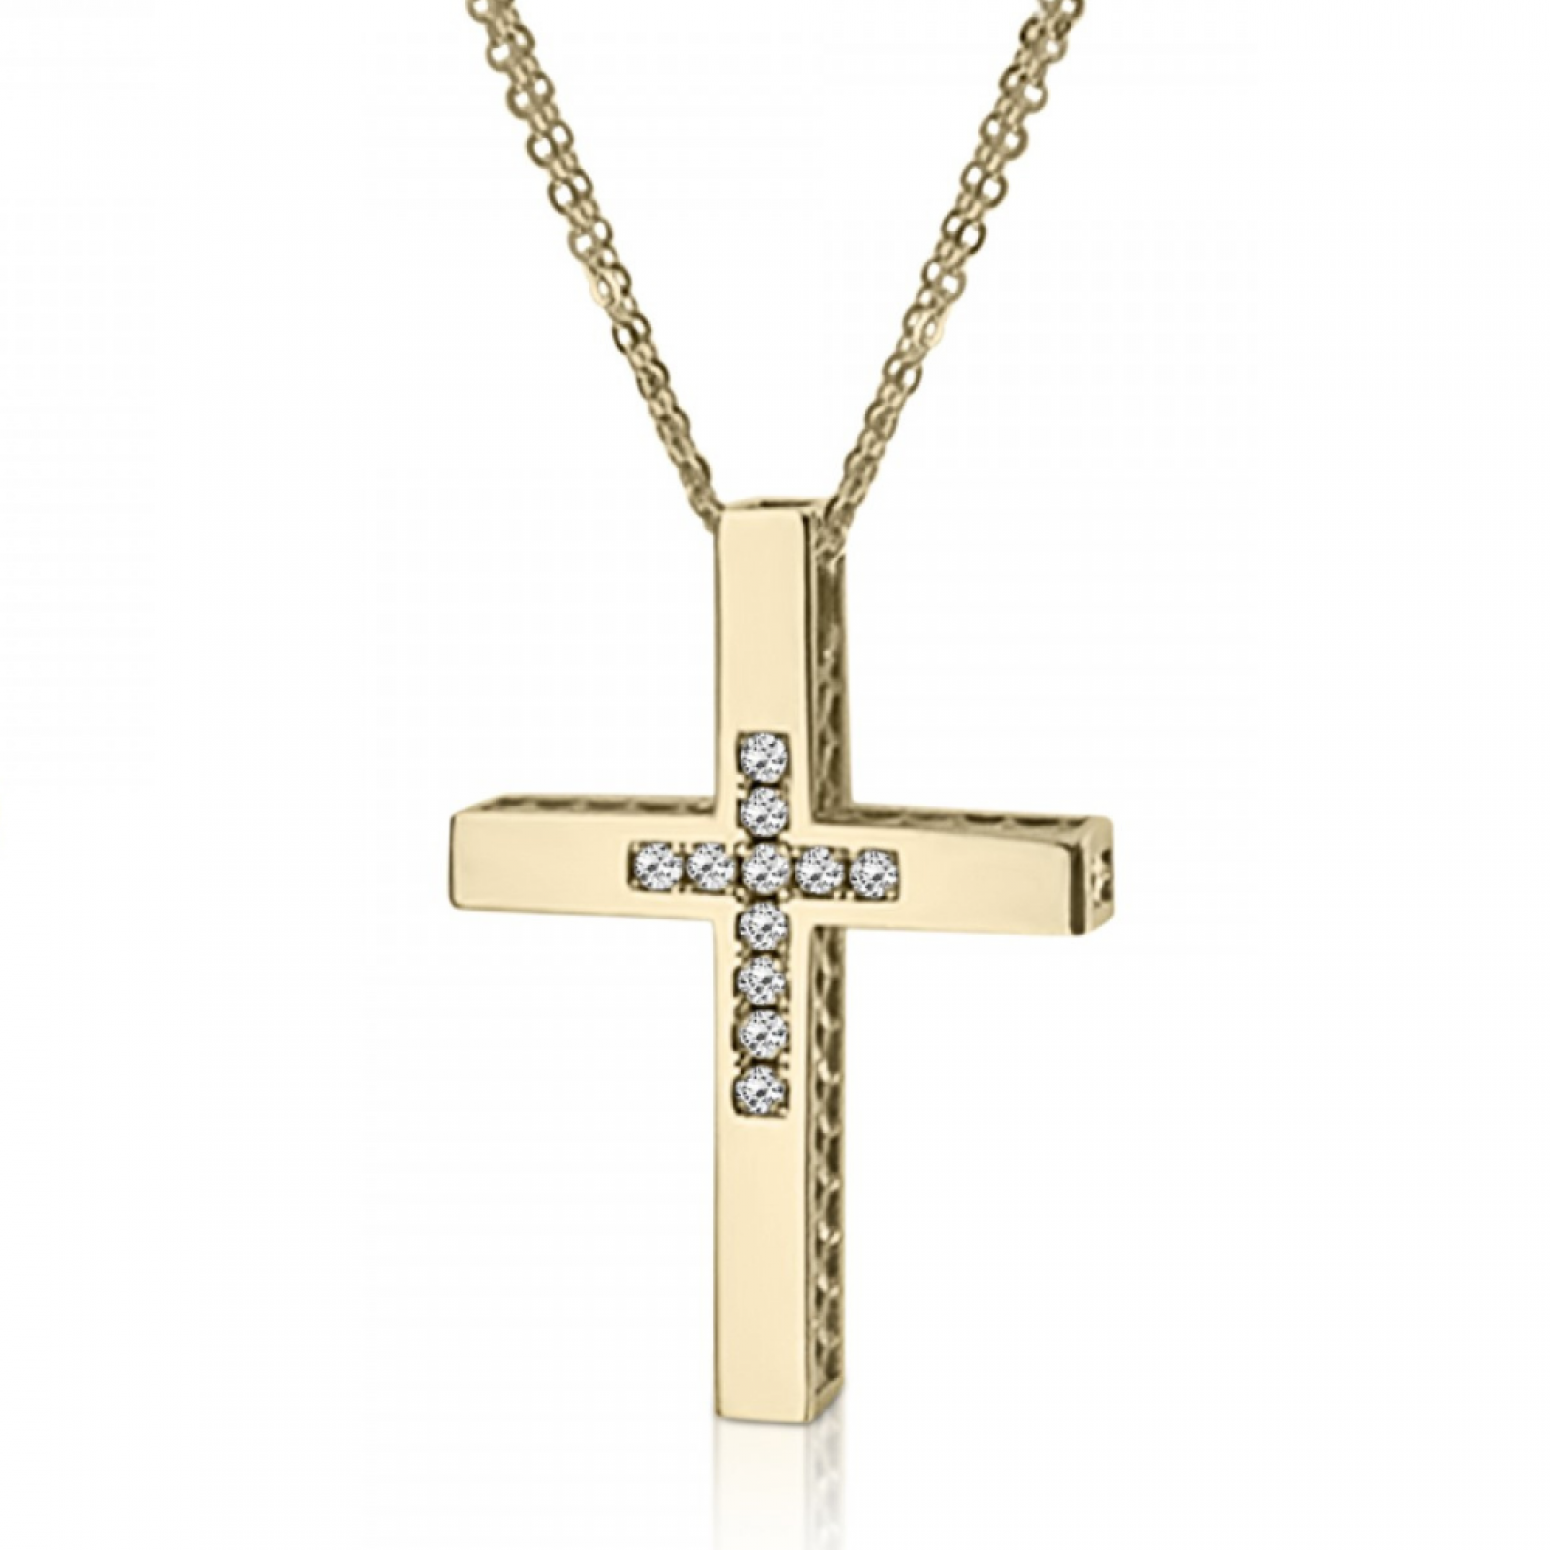 Double sided baptism cross with double chain K14 gold with zircon, ko5242 CROSSES Κοσμηματα - chrilia.gr